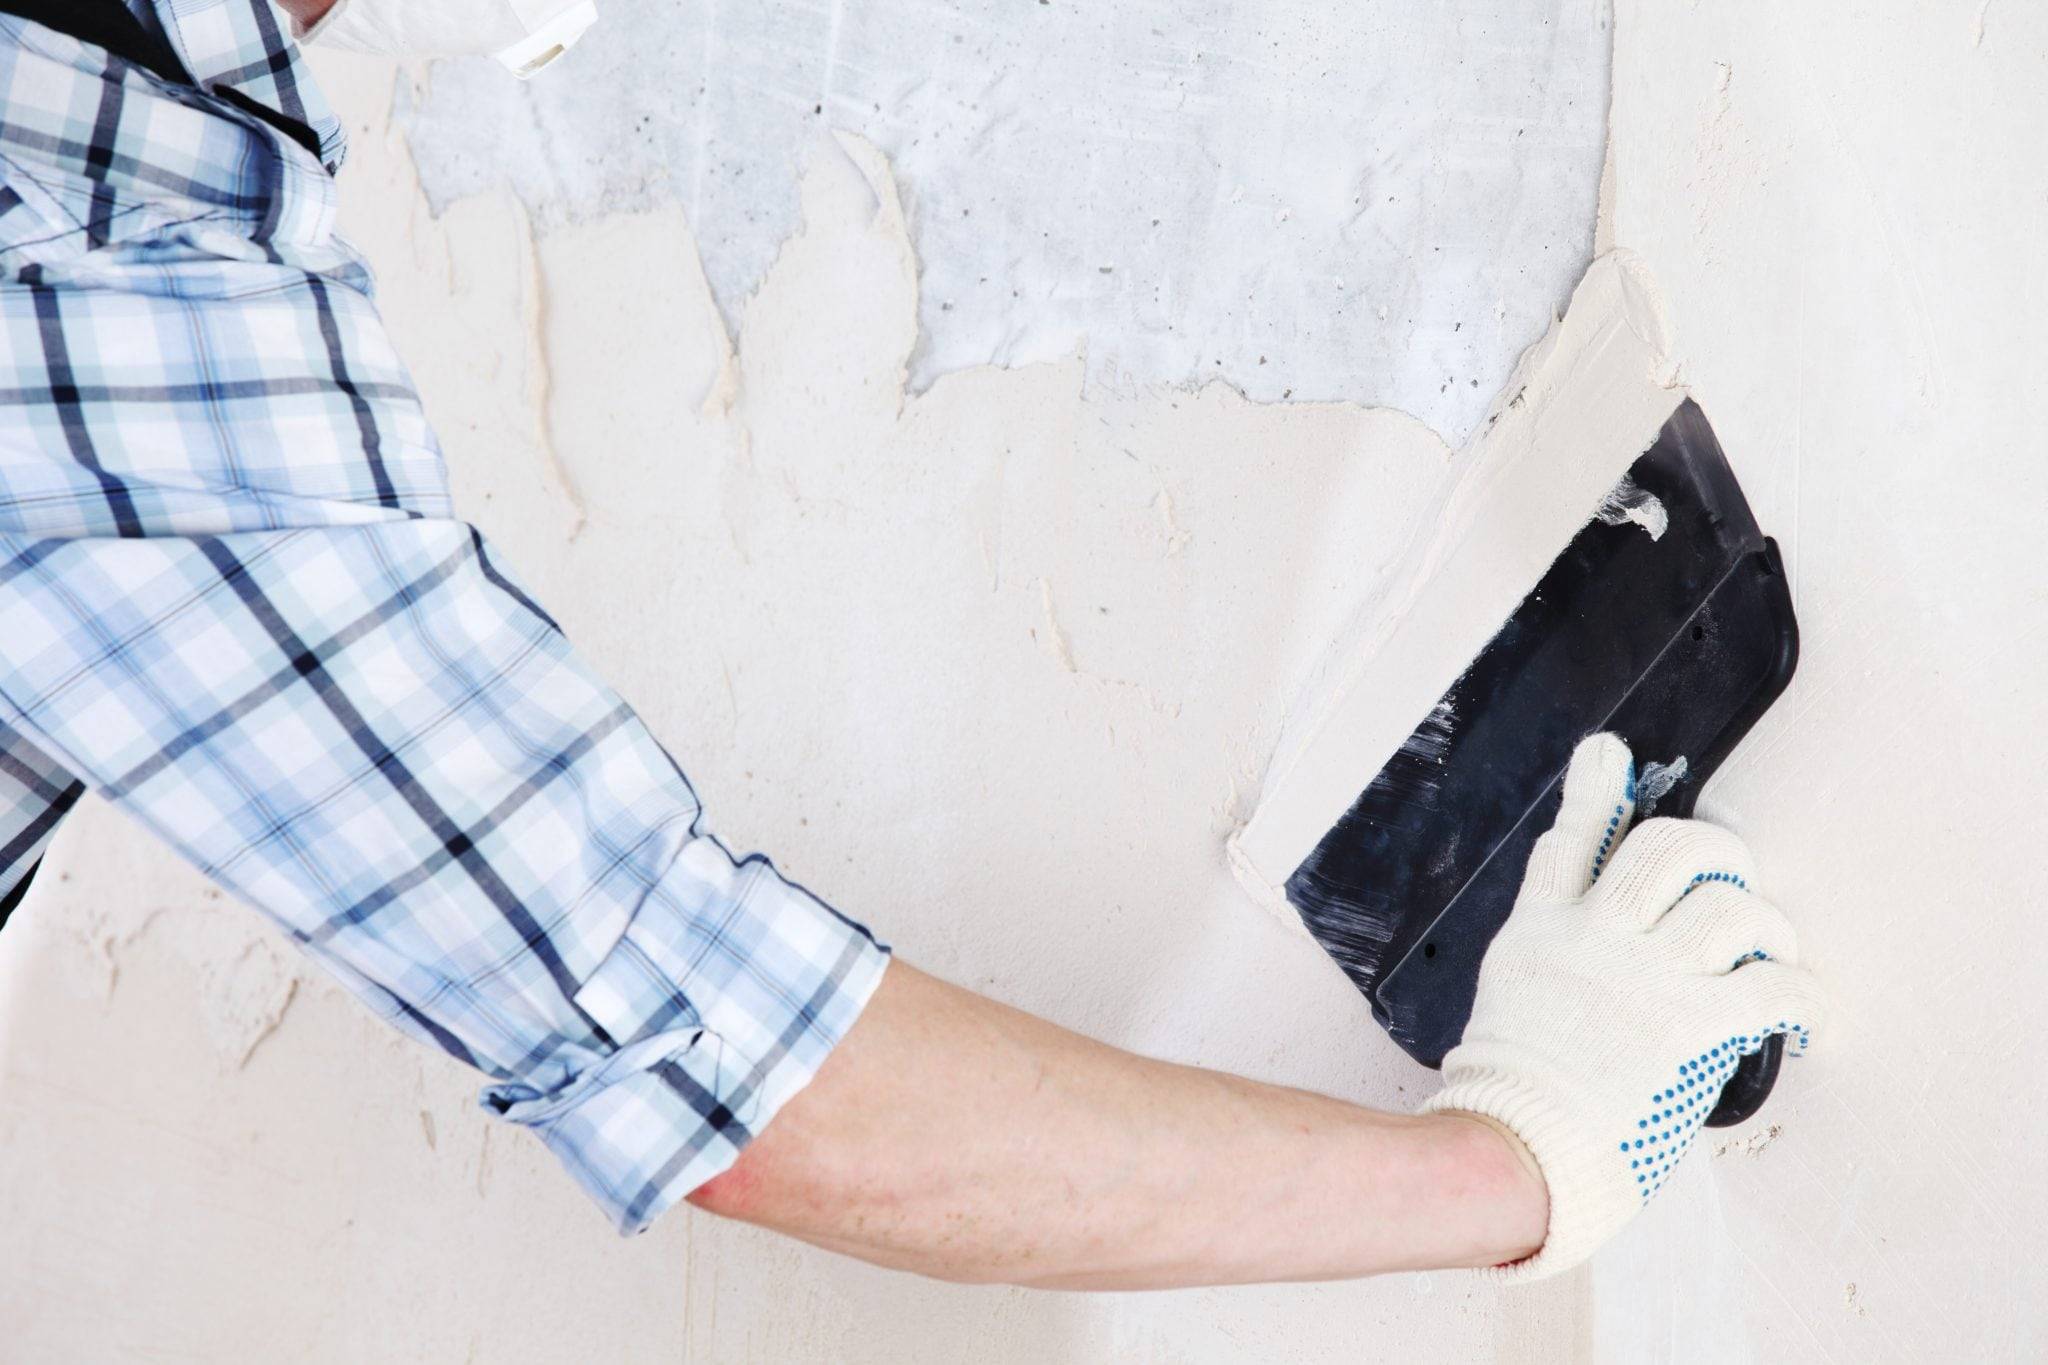 Финишная шпаклевка стен под покраску — видео | онлайн-журнал о ремонте и дизайне